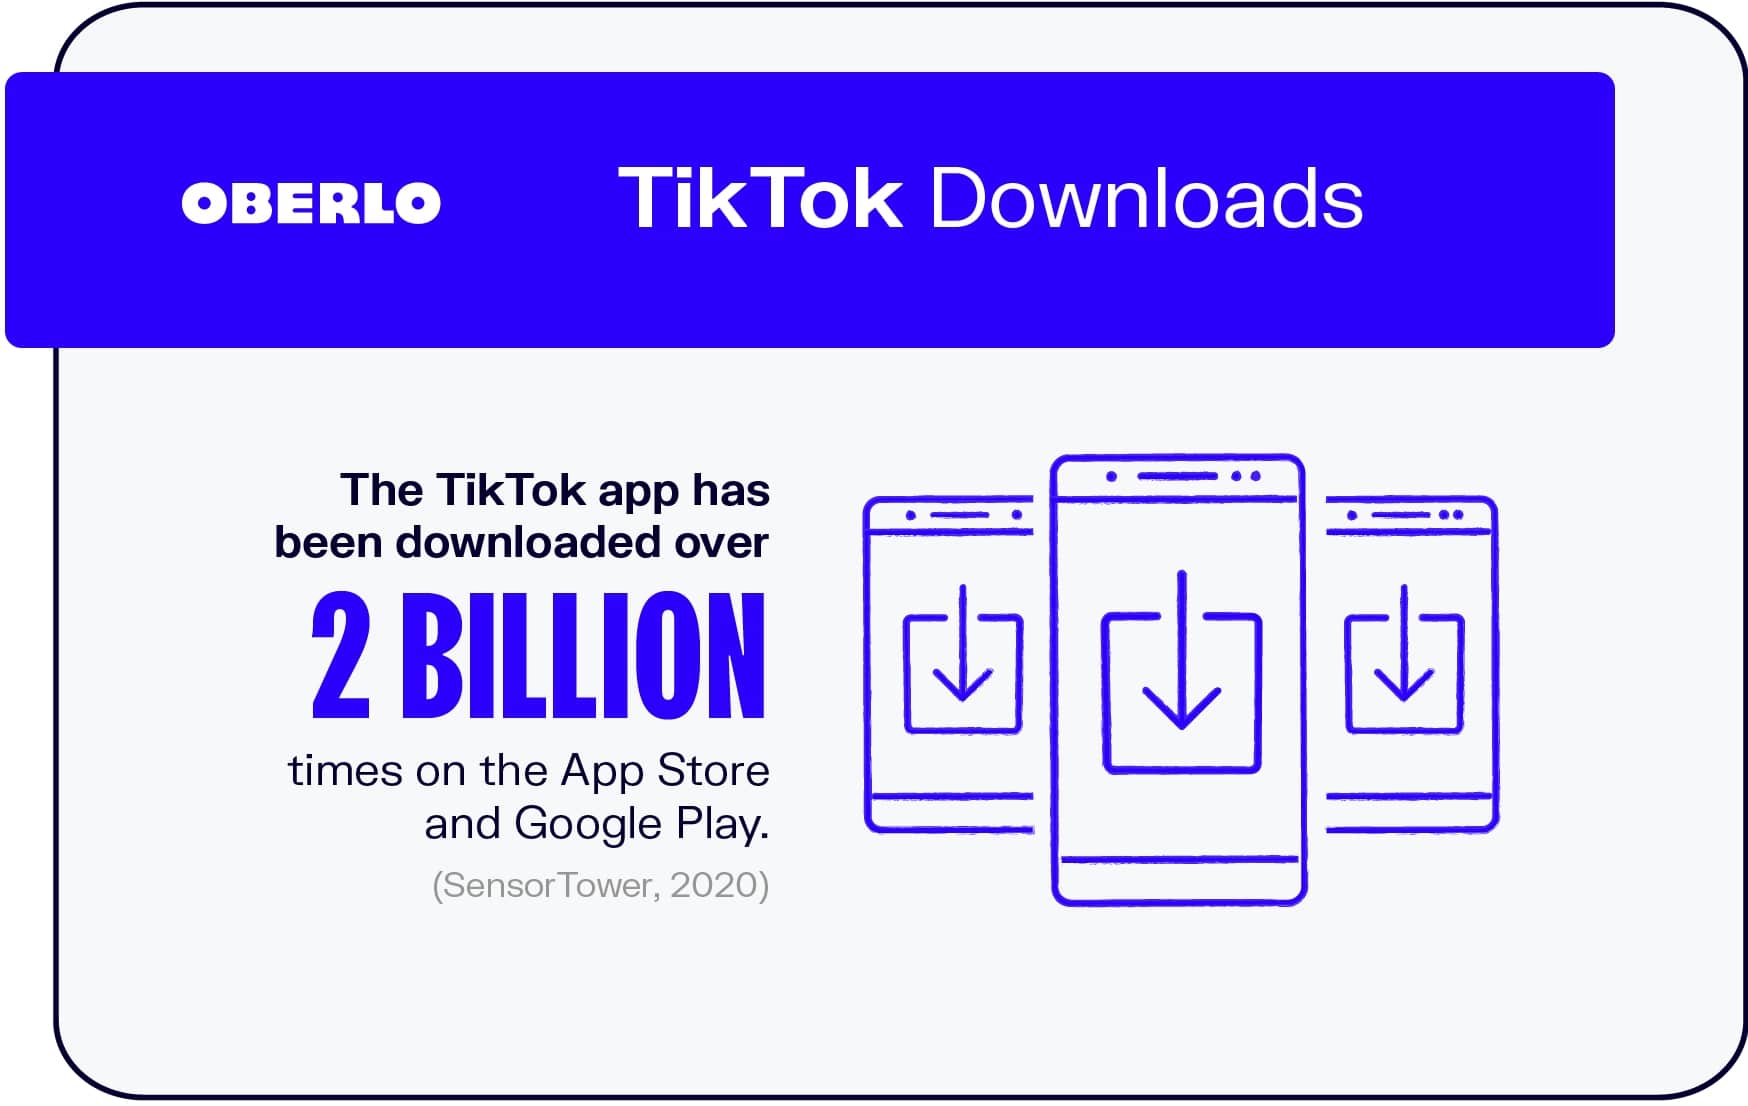 Oberlo graphic showing 2 billion TikTok downloads.